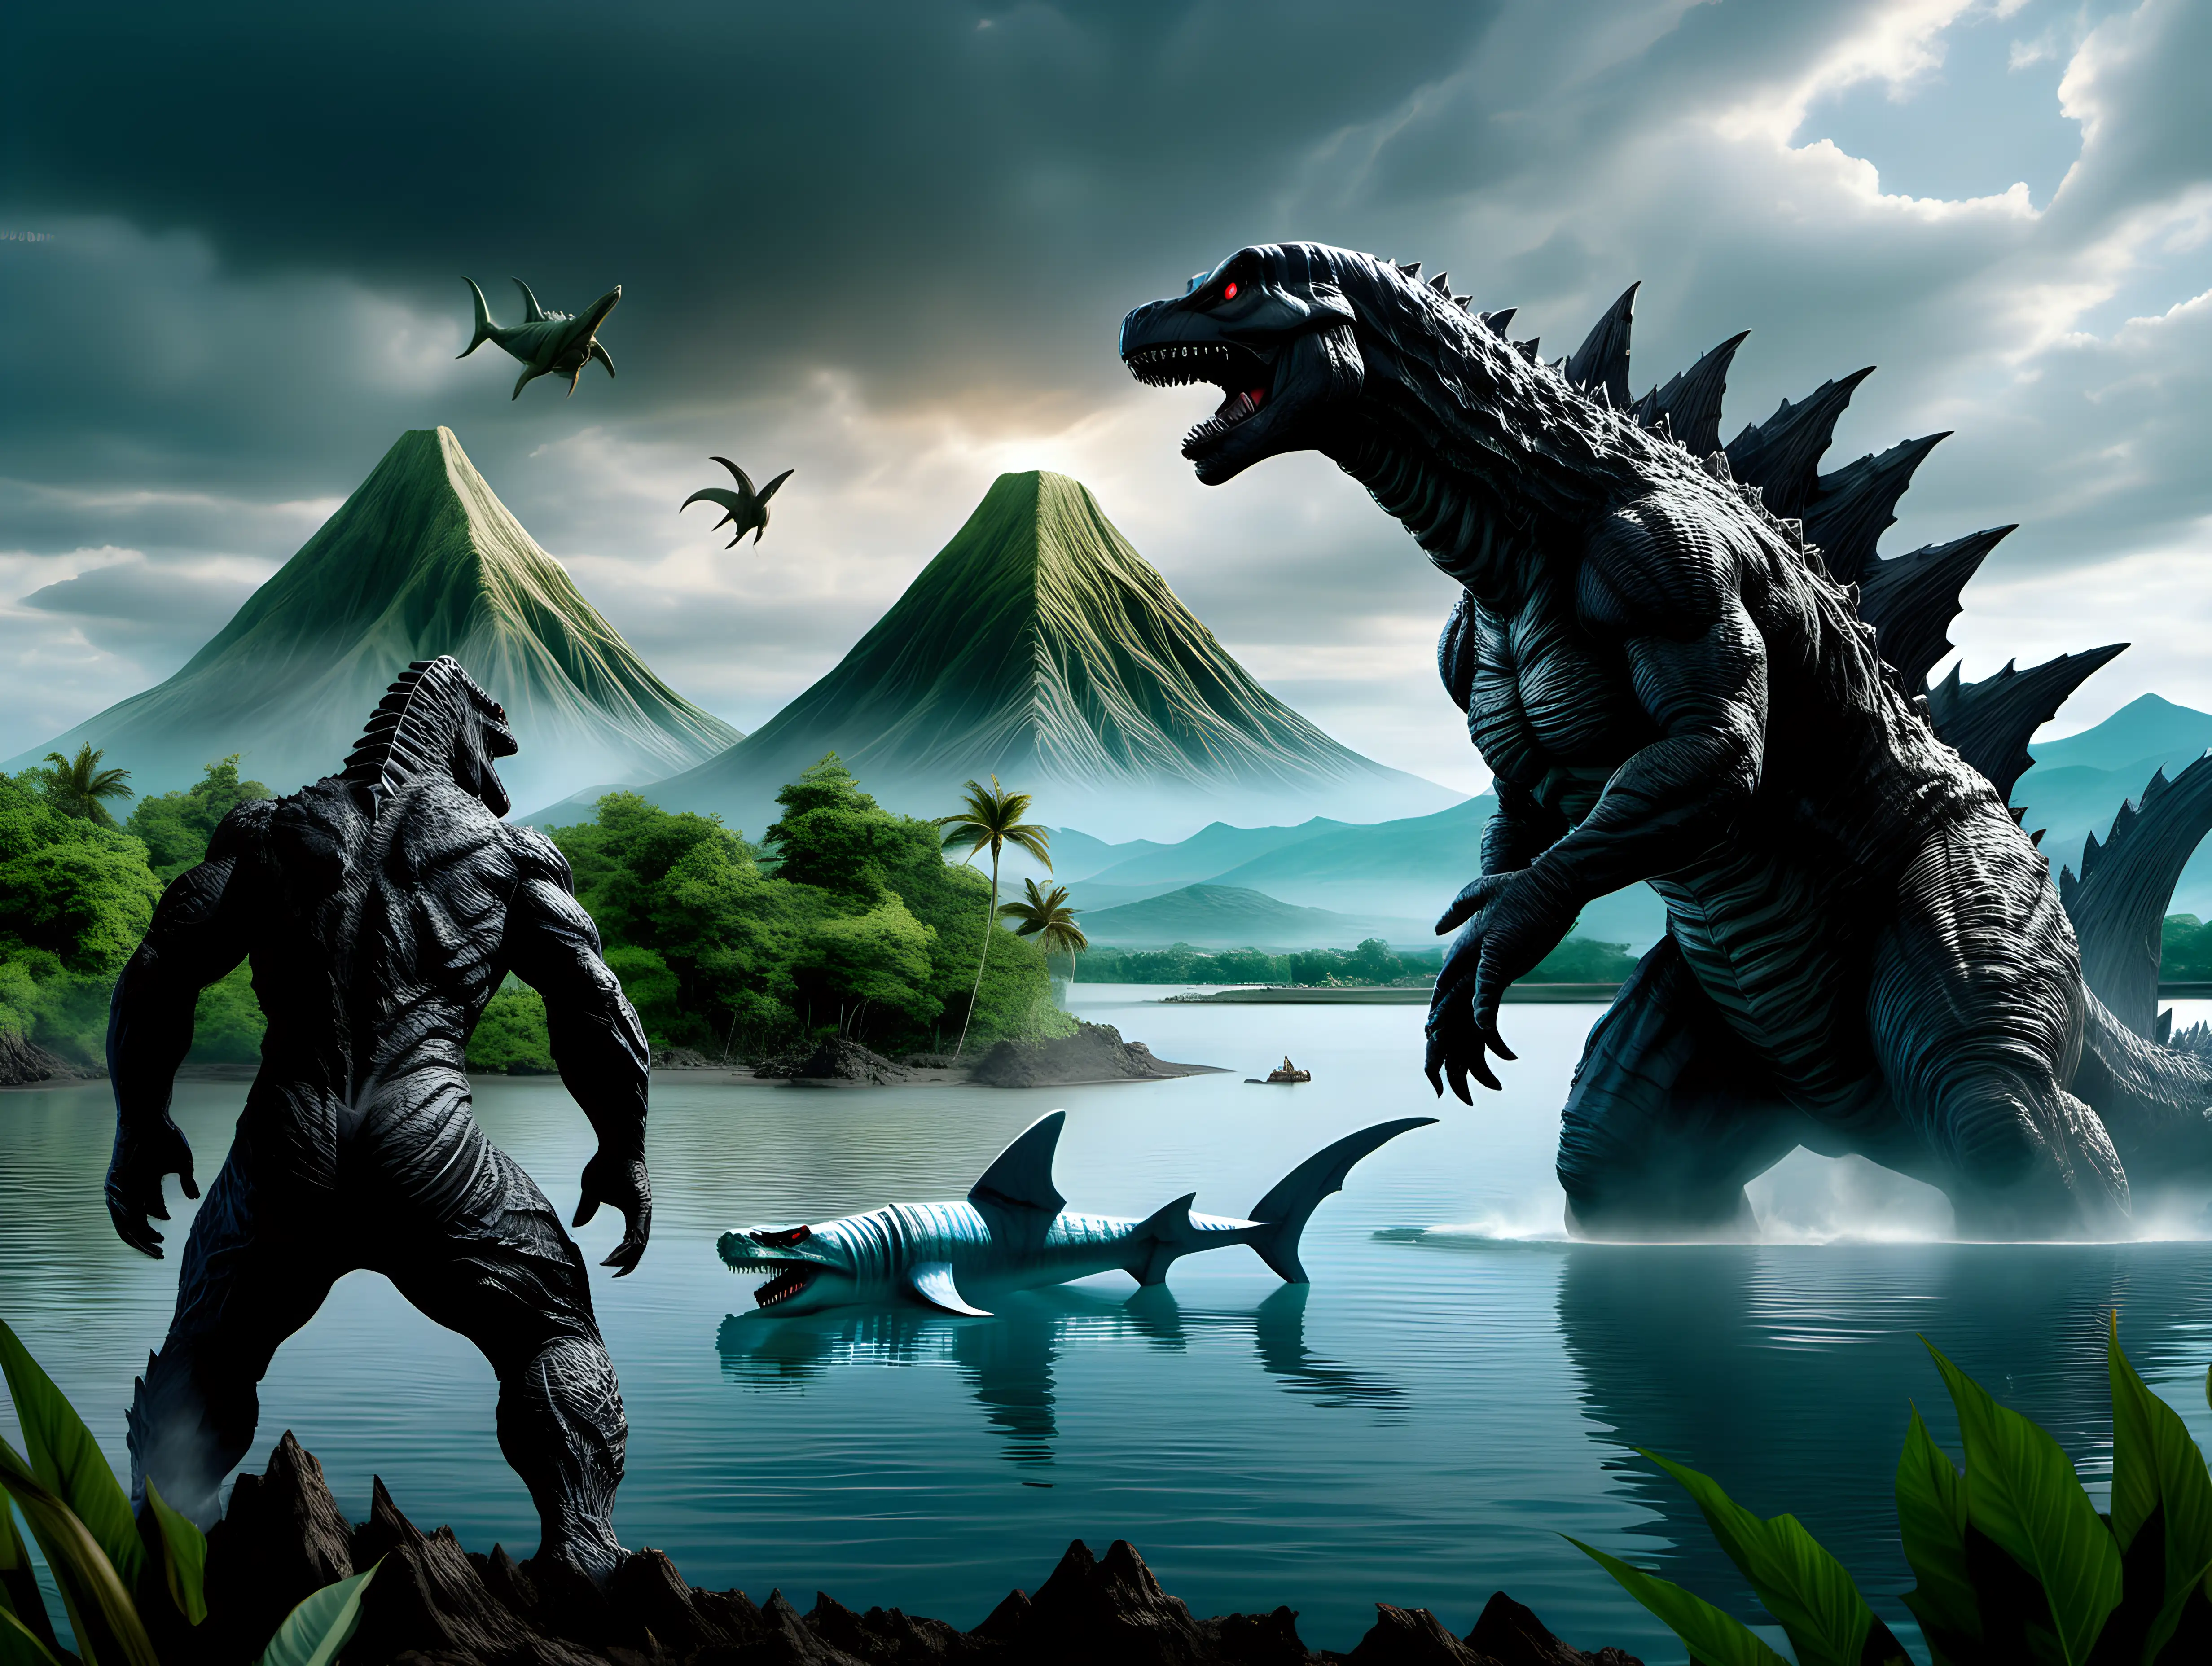 Epic Battle of Godzilla and Monster Shark Witnessing Dinosaur Kingdom